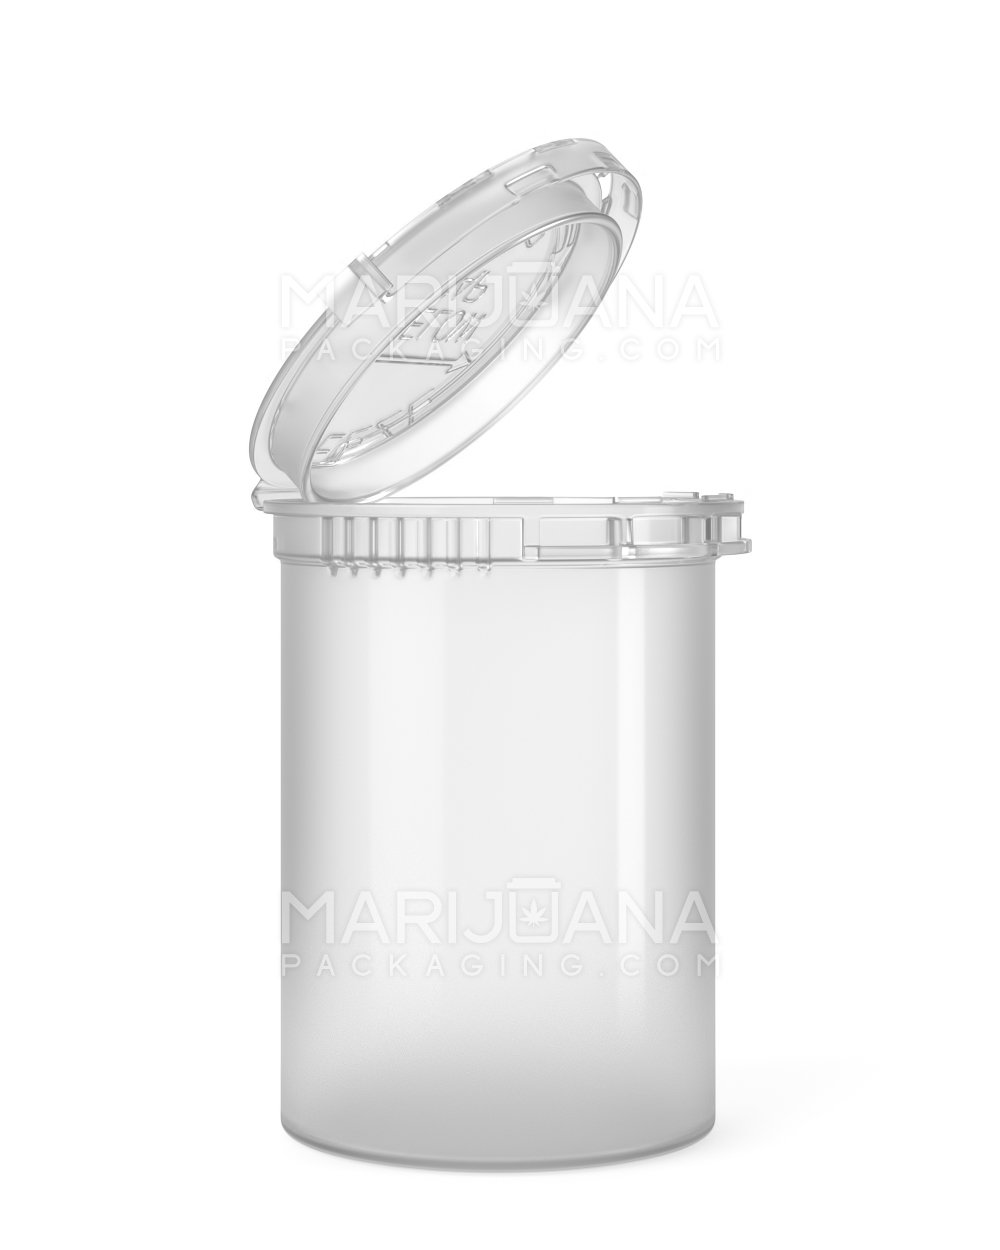 https://cdn.shopify.com/s/files/1/0039/0574/9105/products/child-resistant-tamper-evident-transparent-white-pop-top-bottles-30dr-7g-168-count-dispensary-supply-marijuana-packaging-983029.jpg?v=1593749213&width=1000